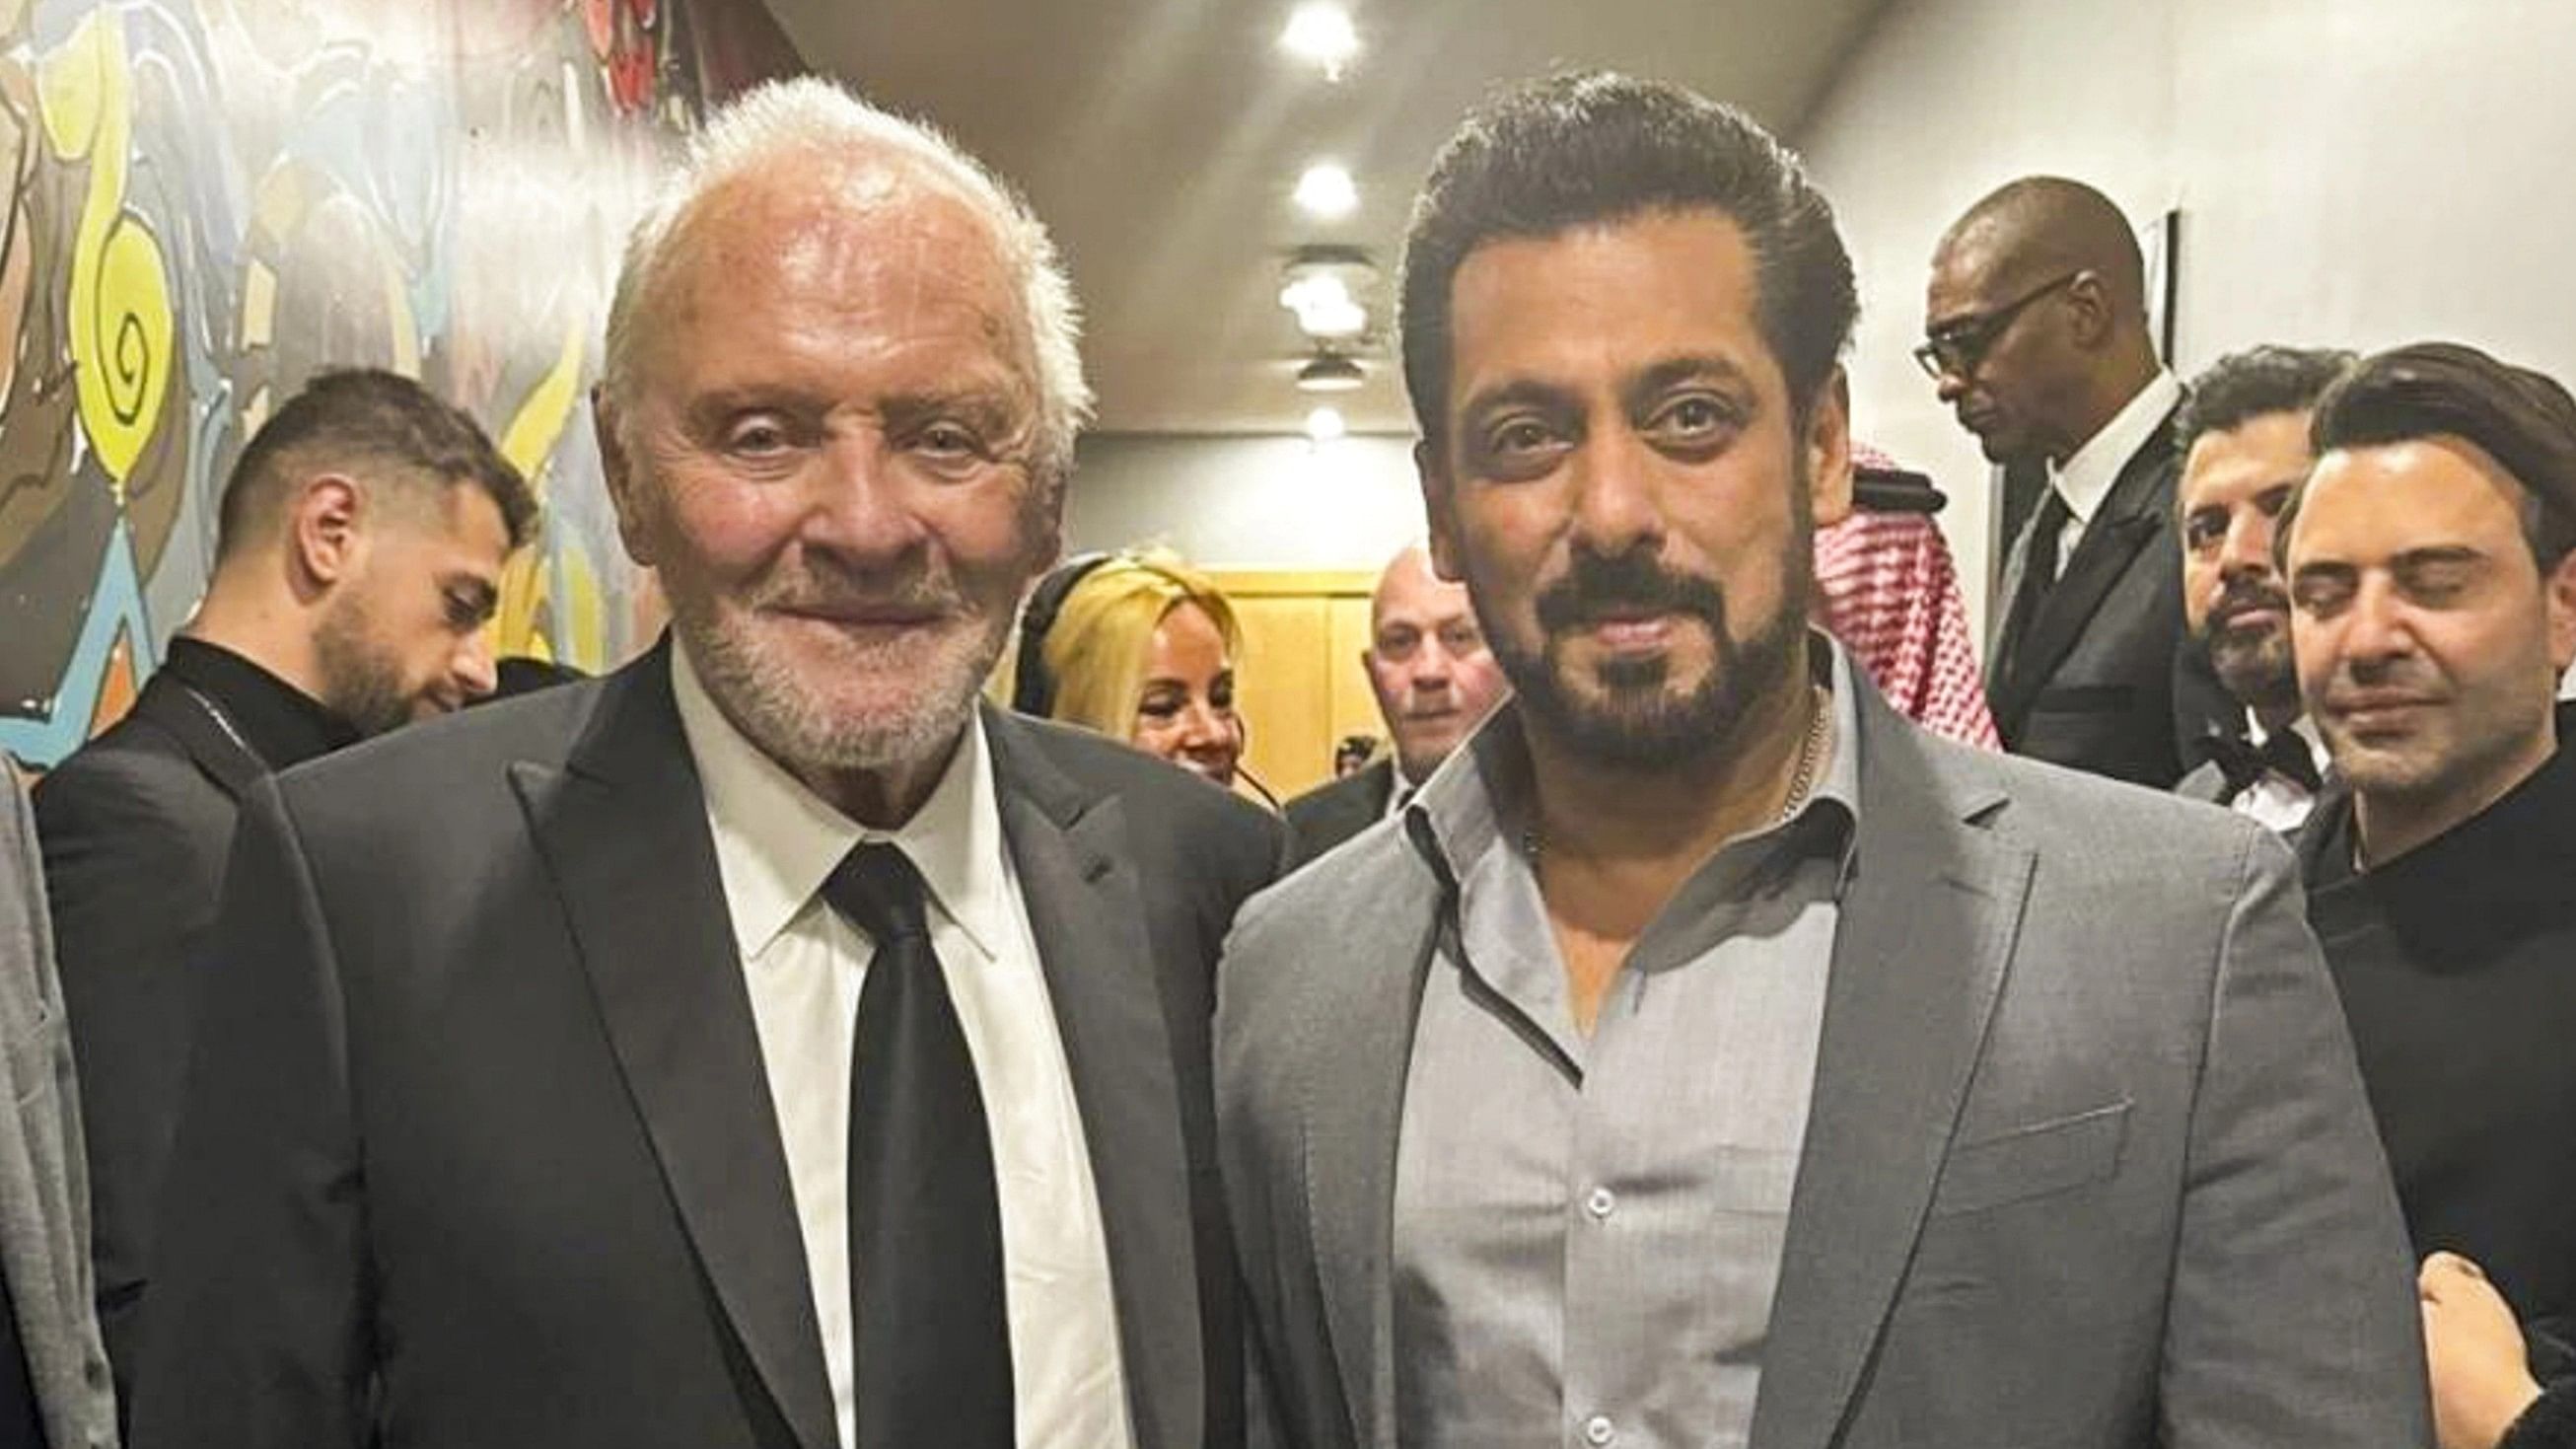 <div class="paragraphs"><p>Actor and director Anthony Hopkins with actor Salman Khan at Joy Awards, in Riyadh, Saudi Arabia. </p></div>